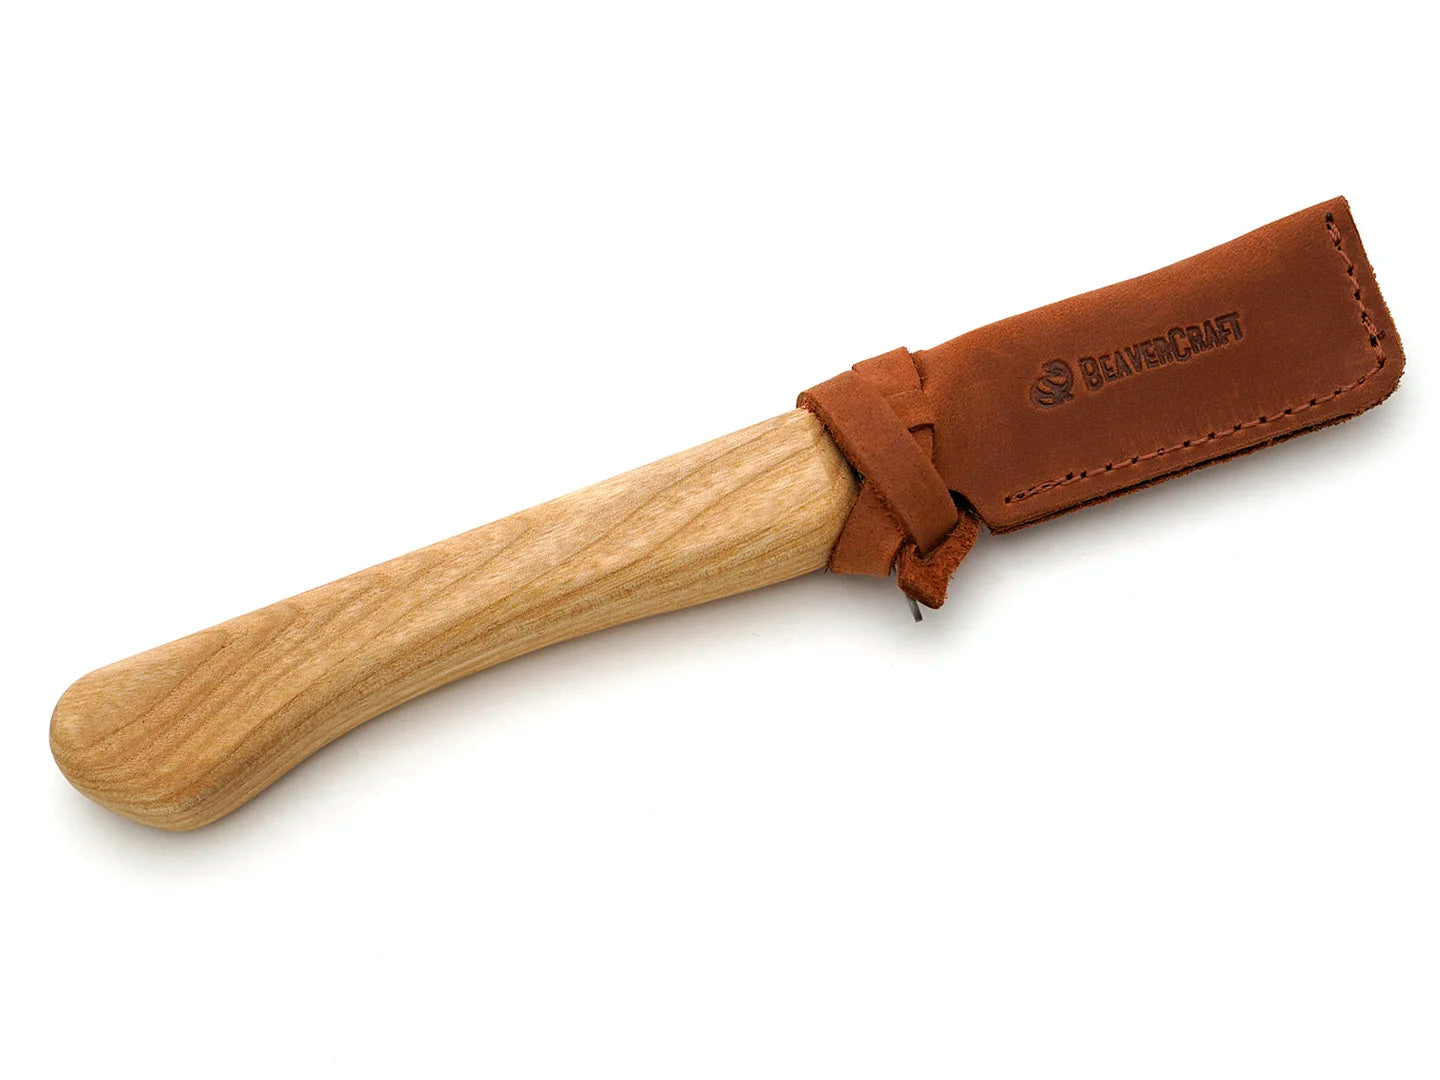 C1kid Craft Knife for Kids